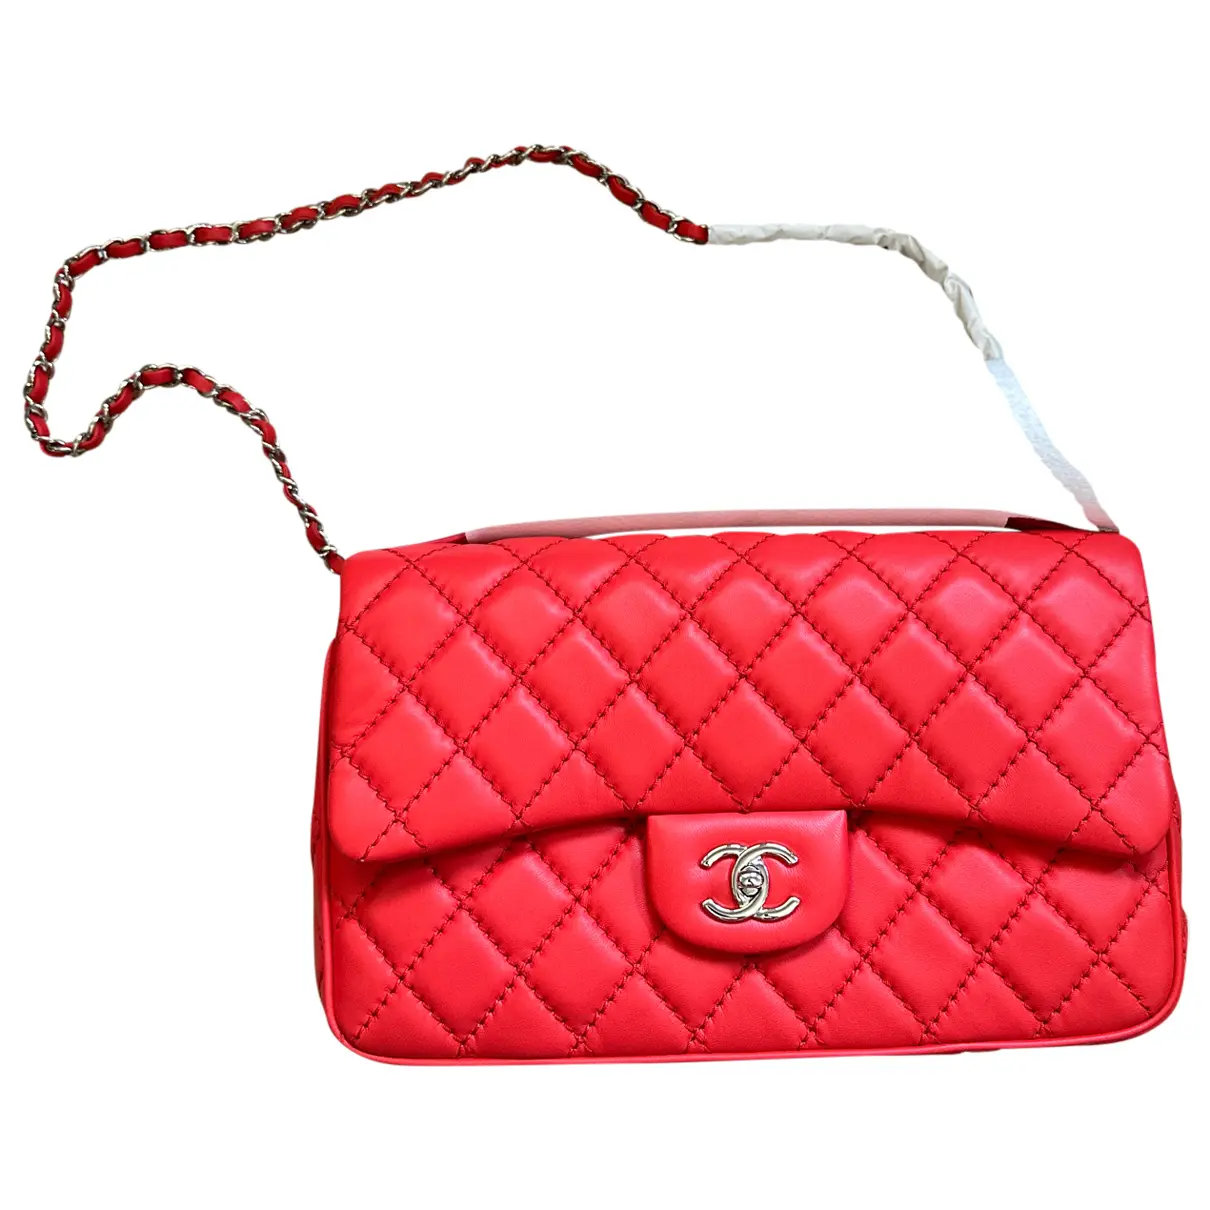 Coco Handle exotic leathers handbag